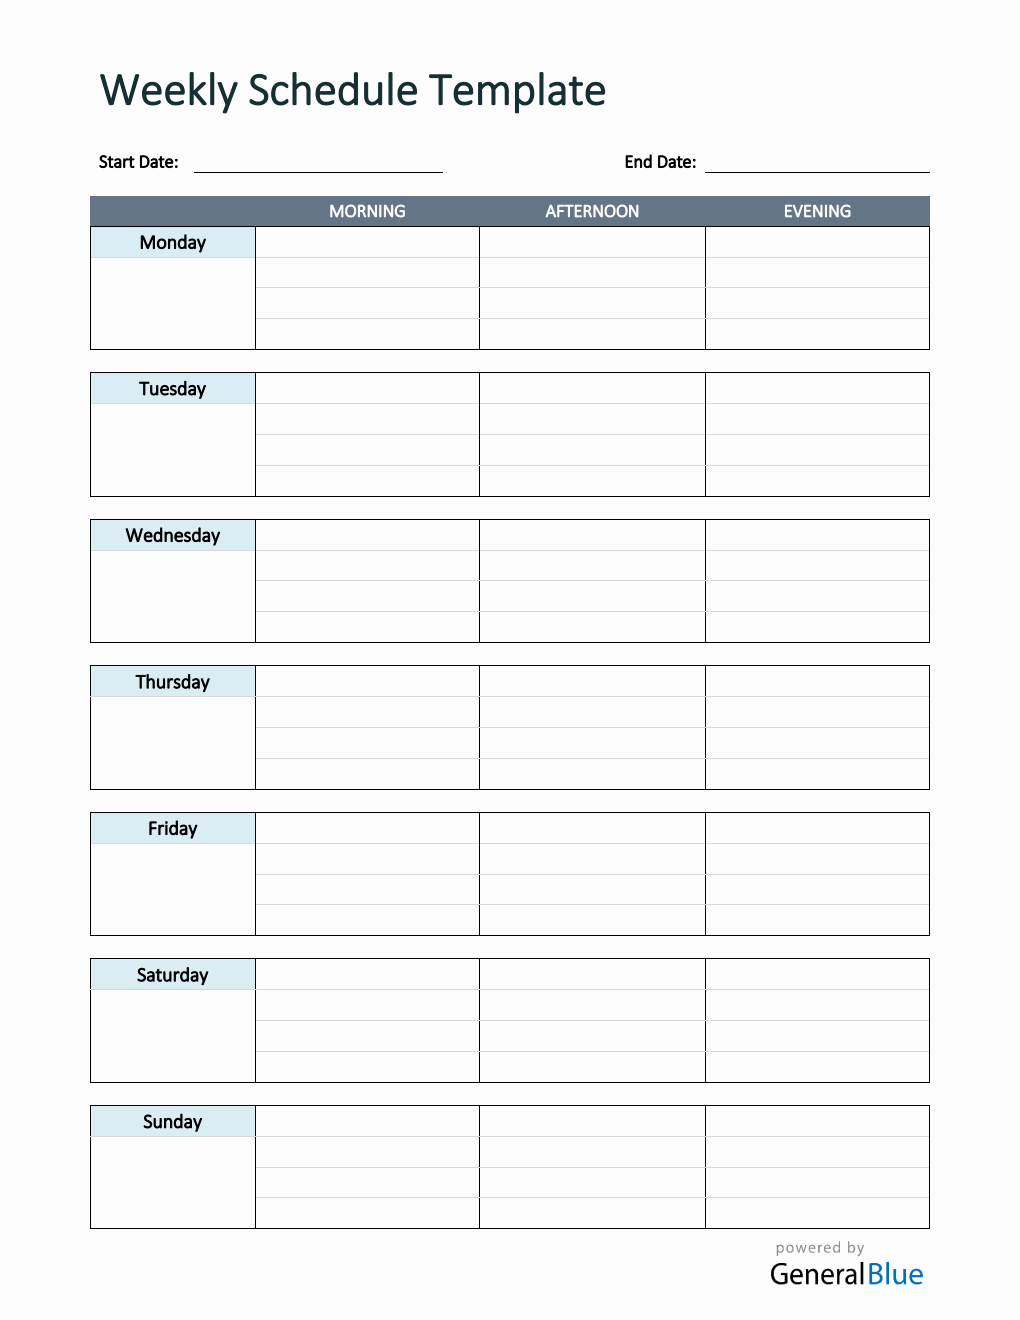 Simple Weekly Schedule Template in PDF